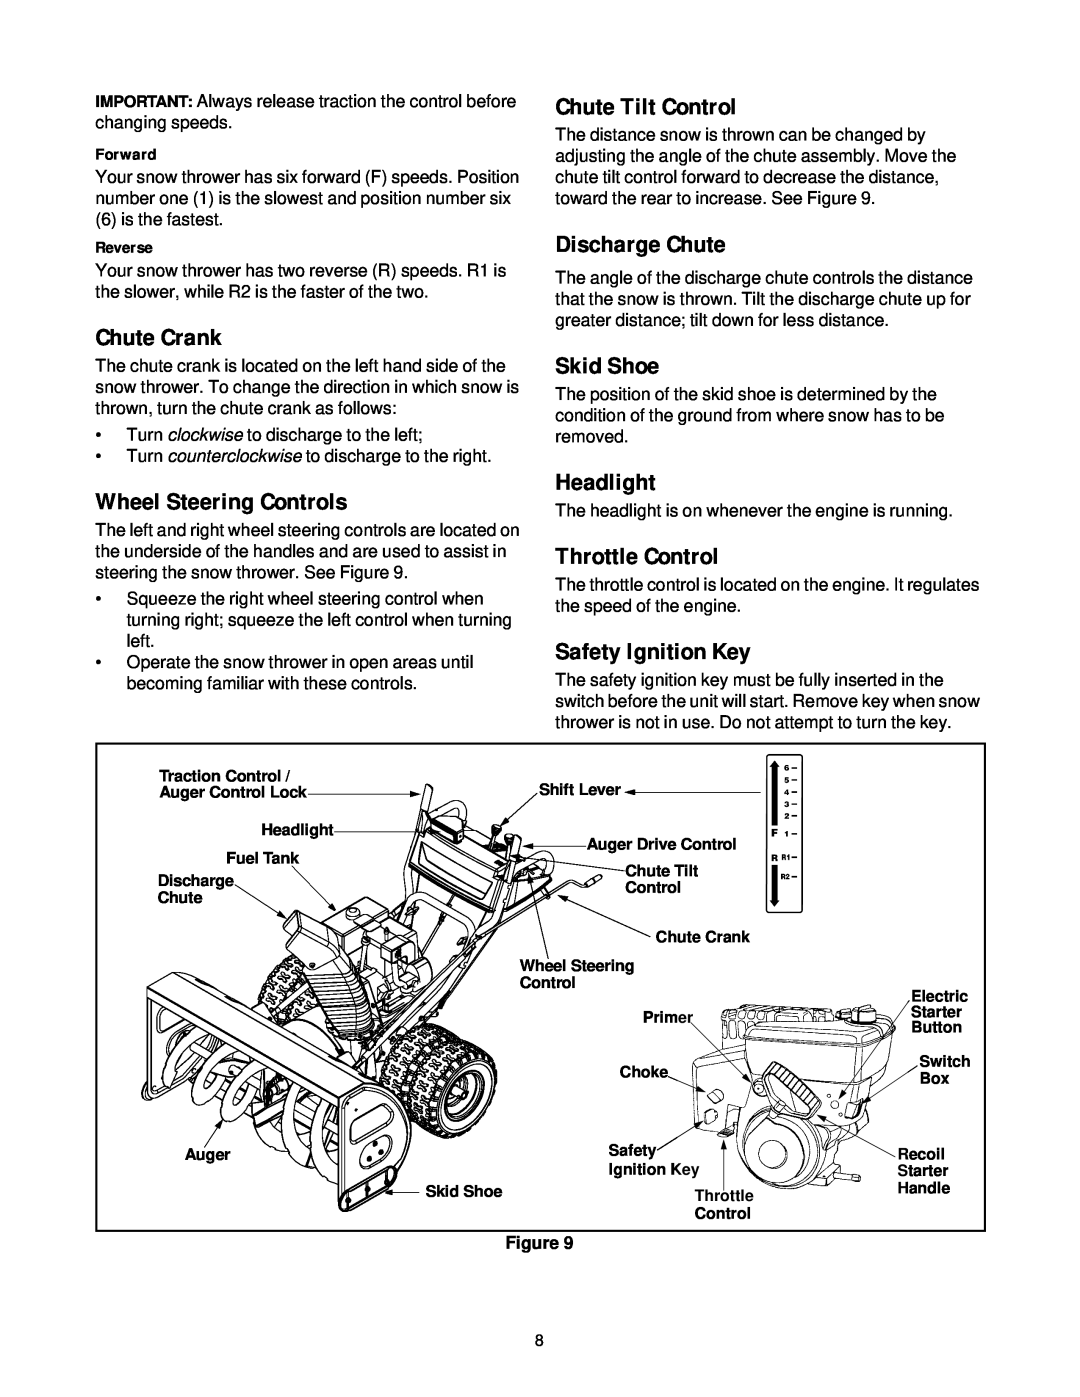 Yard-Man 31AE993J401 manual Chute Crank, Chute Tilt Control, Discharge Chute, Skid Shoe, Wheel Steering Controls, Headlight 